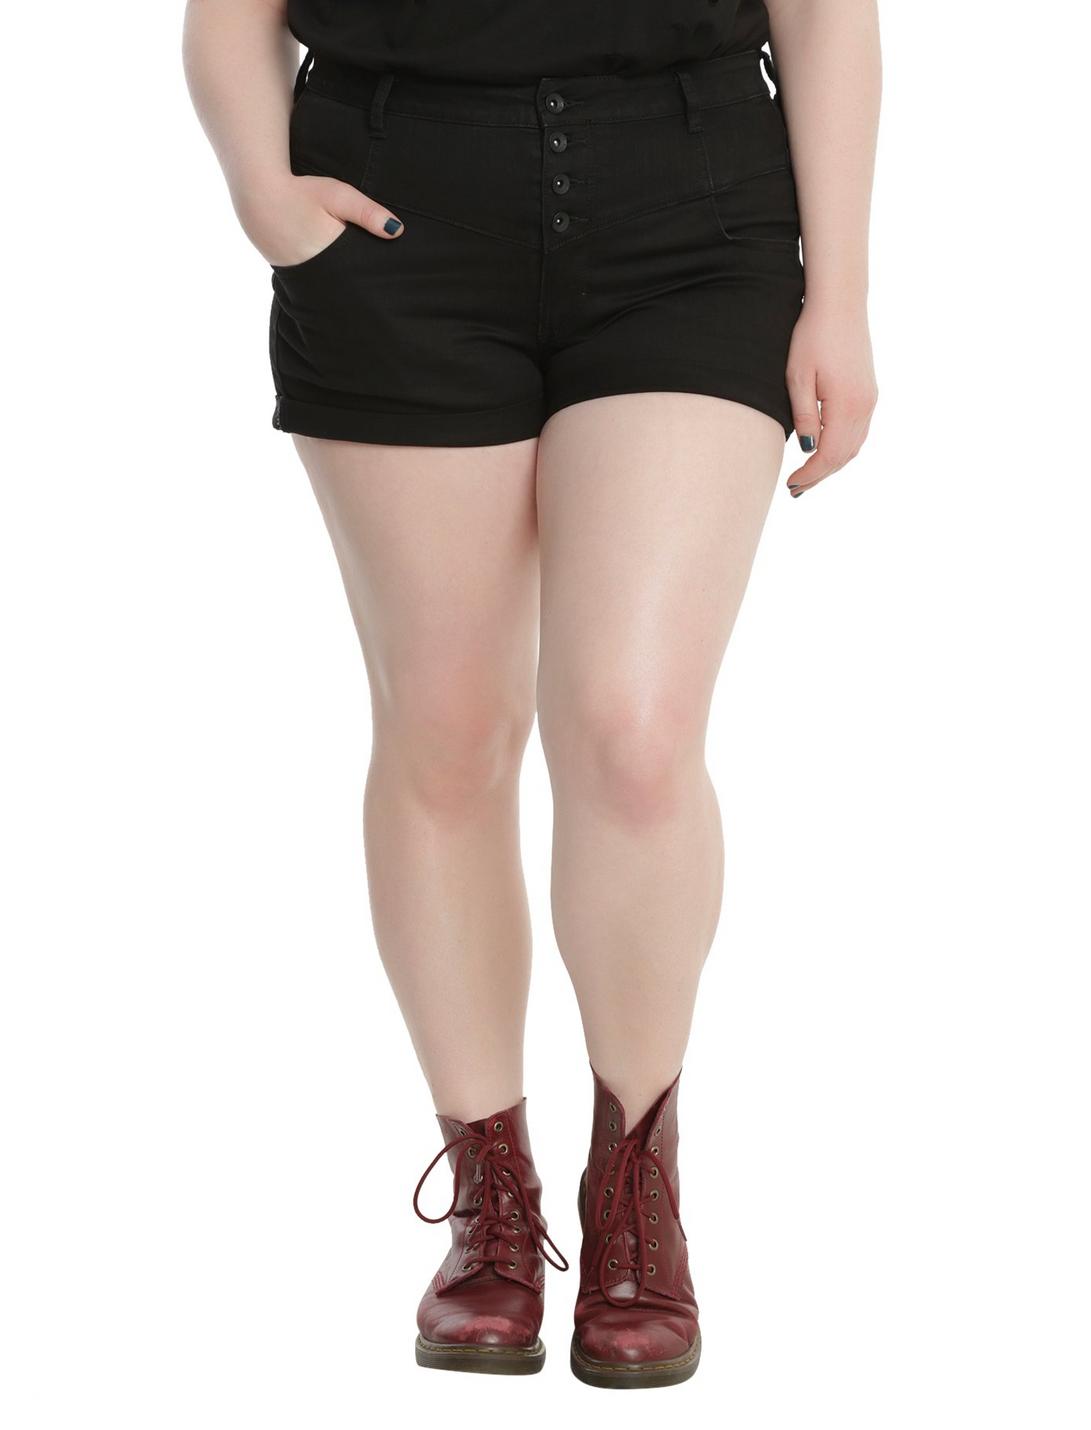 Blackheart Black High-Waisted V-Stitch Shorts Plus Size, BLACK, hi-res